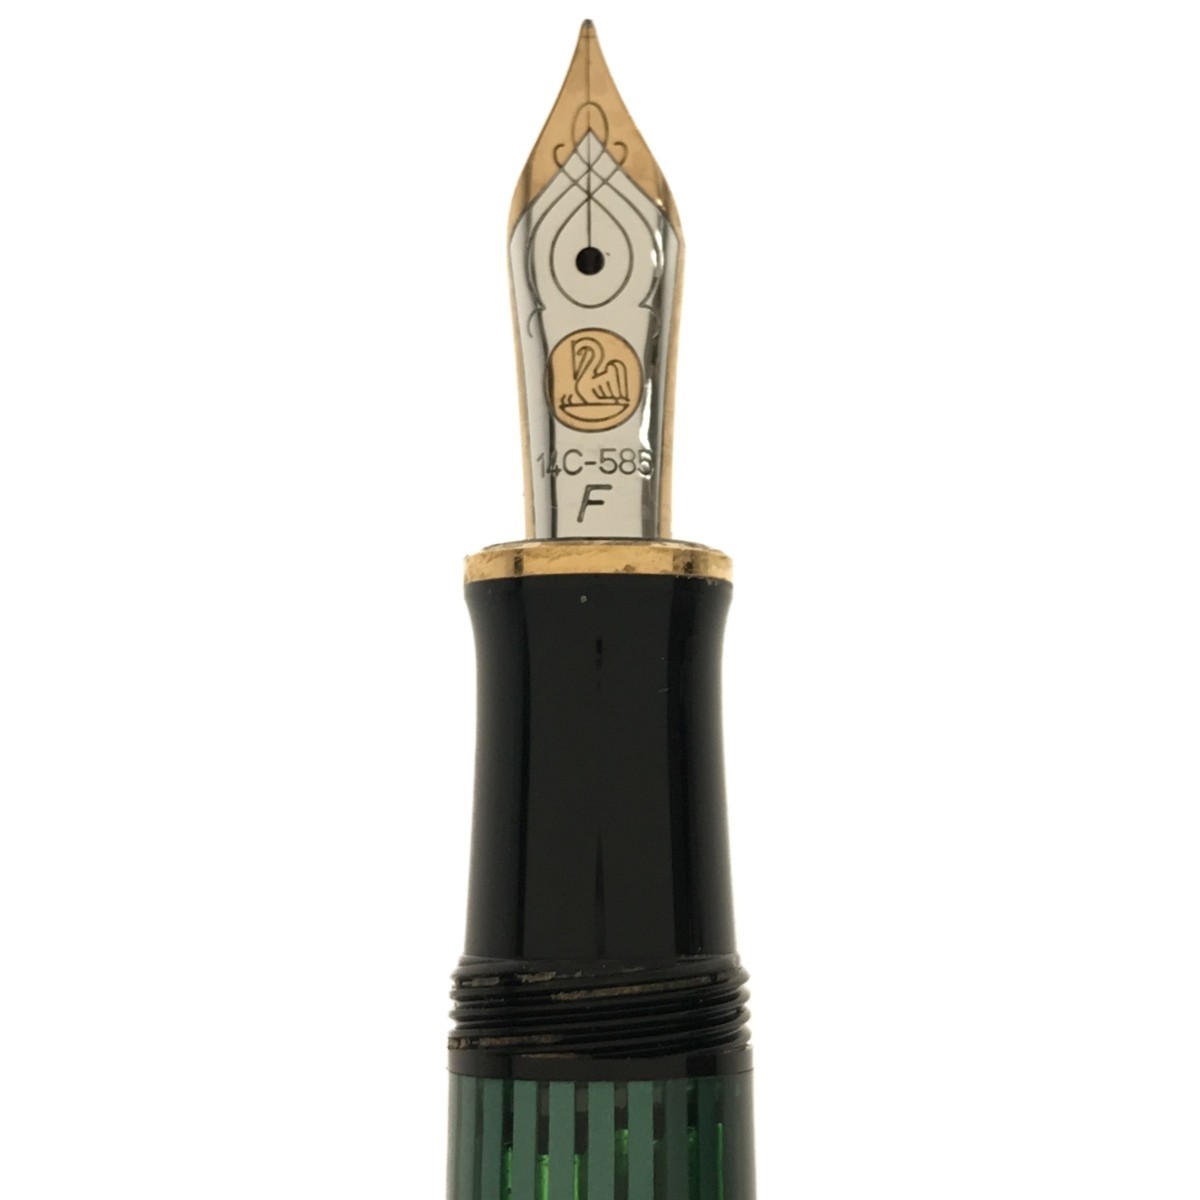 PELIKAN Souveran M400 ペリカン スーベレーン 万年筆 ブラック × ゴールド 緑縞 ペン先14C 585 F 刻印 筆記用具 ドイツ製 文房具 J825 - 5